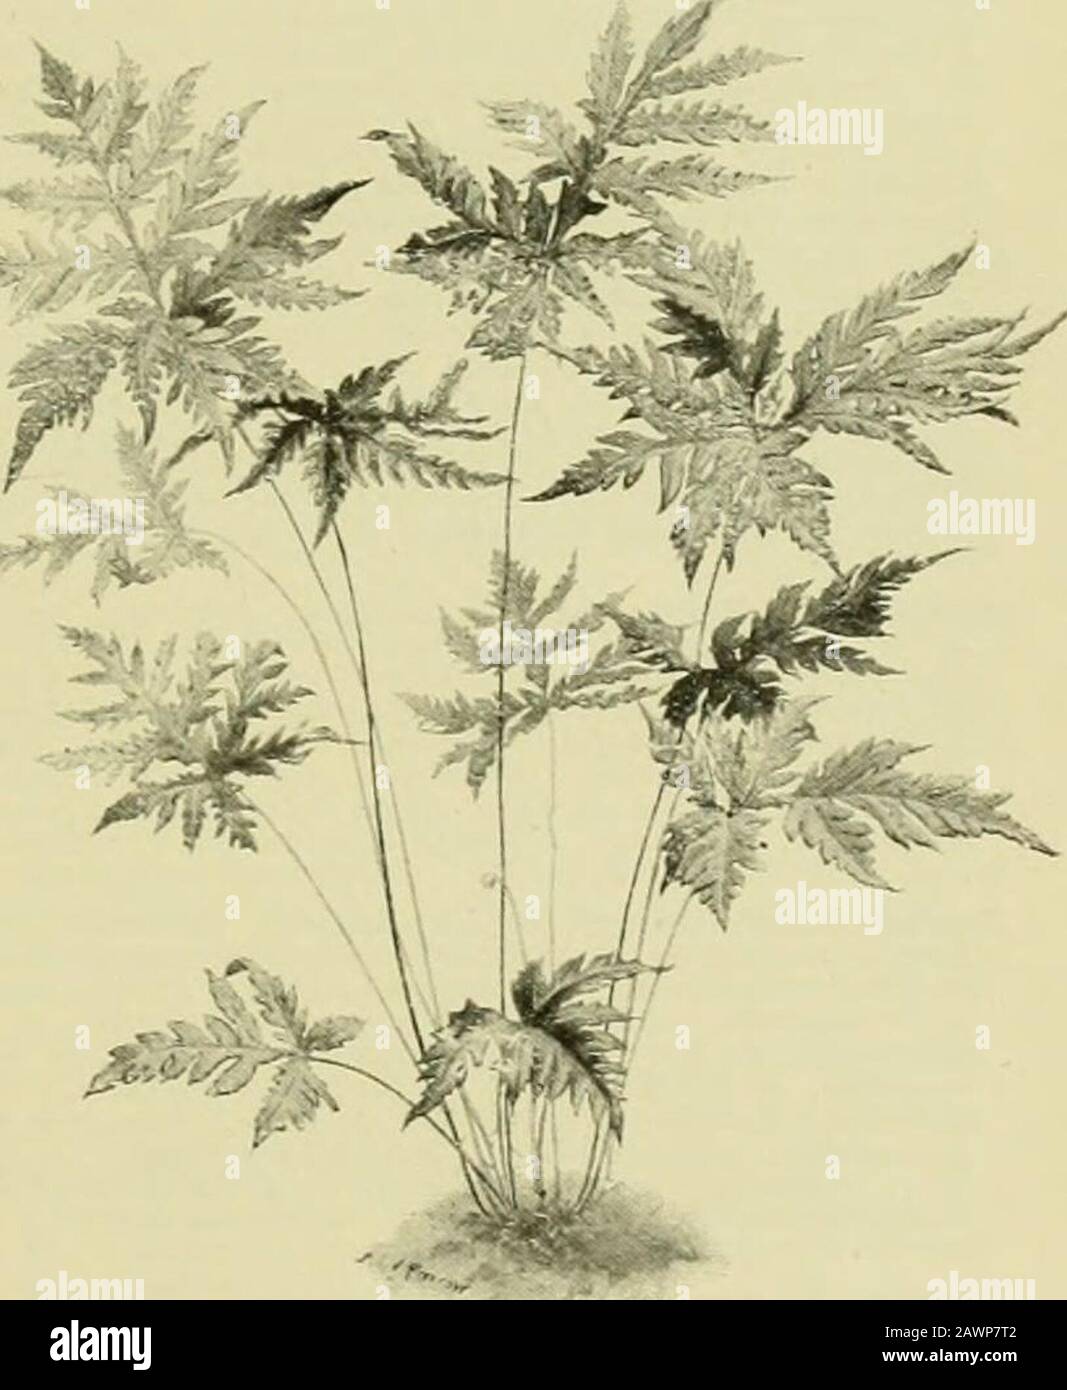 The century supplement to the dictionary of gardening, a practical and scientific encyclopaedia of horticulture for gardeners and botanists . leniumalatum*, A. attejiuatuin, A. - Belangcrii*, A. bidbiferum,A. caxidatxim*, A. Colen.&lt;:oi, A. campressum, A. dimorjthujn,A. fiabellifolium, A. flaccidum, A. laxxtm pumilum, A. longissi-mxim, A. monanthemxim, A. obtusHobuin, A, reclinatxnn*,A. Sandersoni*, A. tenellxtm, A. viviparum*, A. v. nobile*. Cera-topteris thalictroides*. Cystoptens bulbifera. Fadyena proli/era.Gxjmnogramme schizophylla*. Hemionitis cordata*, H. palmata*.Bypolepis Bergiana. Stock Photo